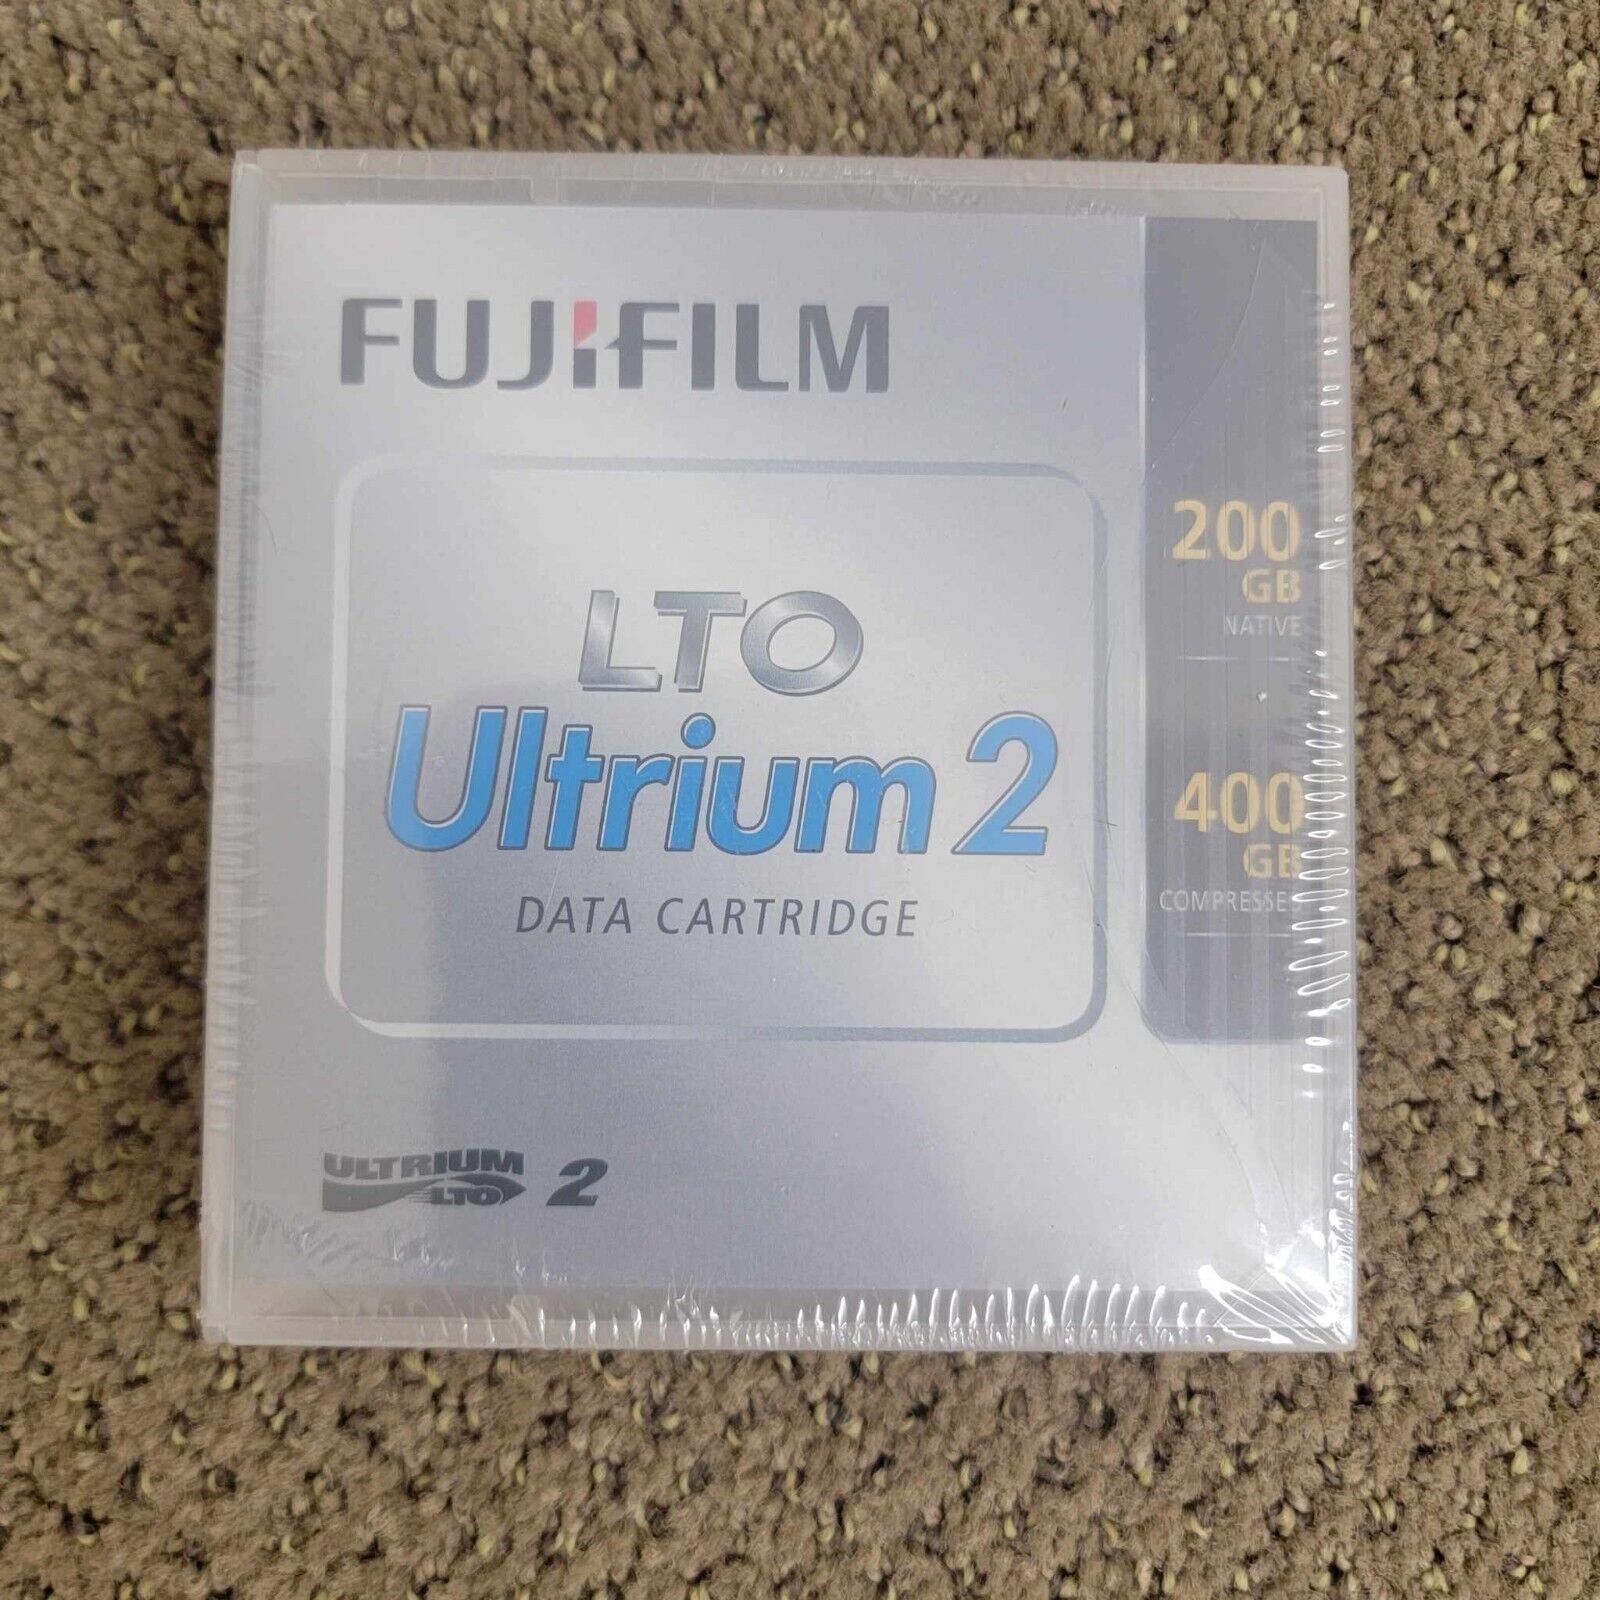 Fujifilm LTO Ultrium 2 Data Cartridge 200GB/400GB New Factory Sealed LT02 1PK